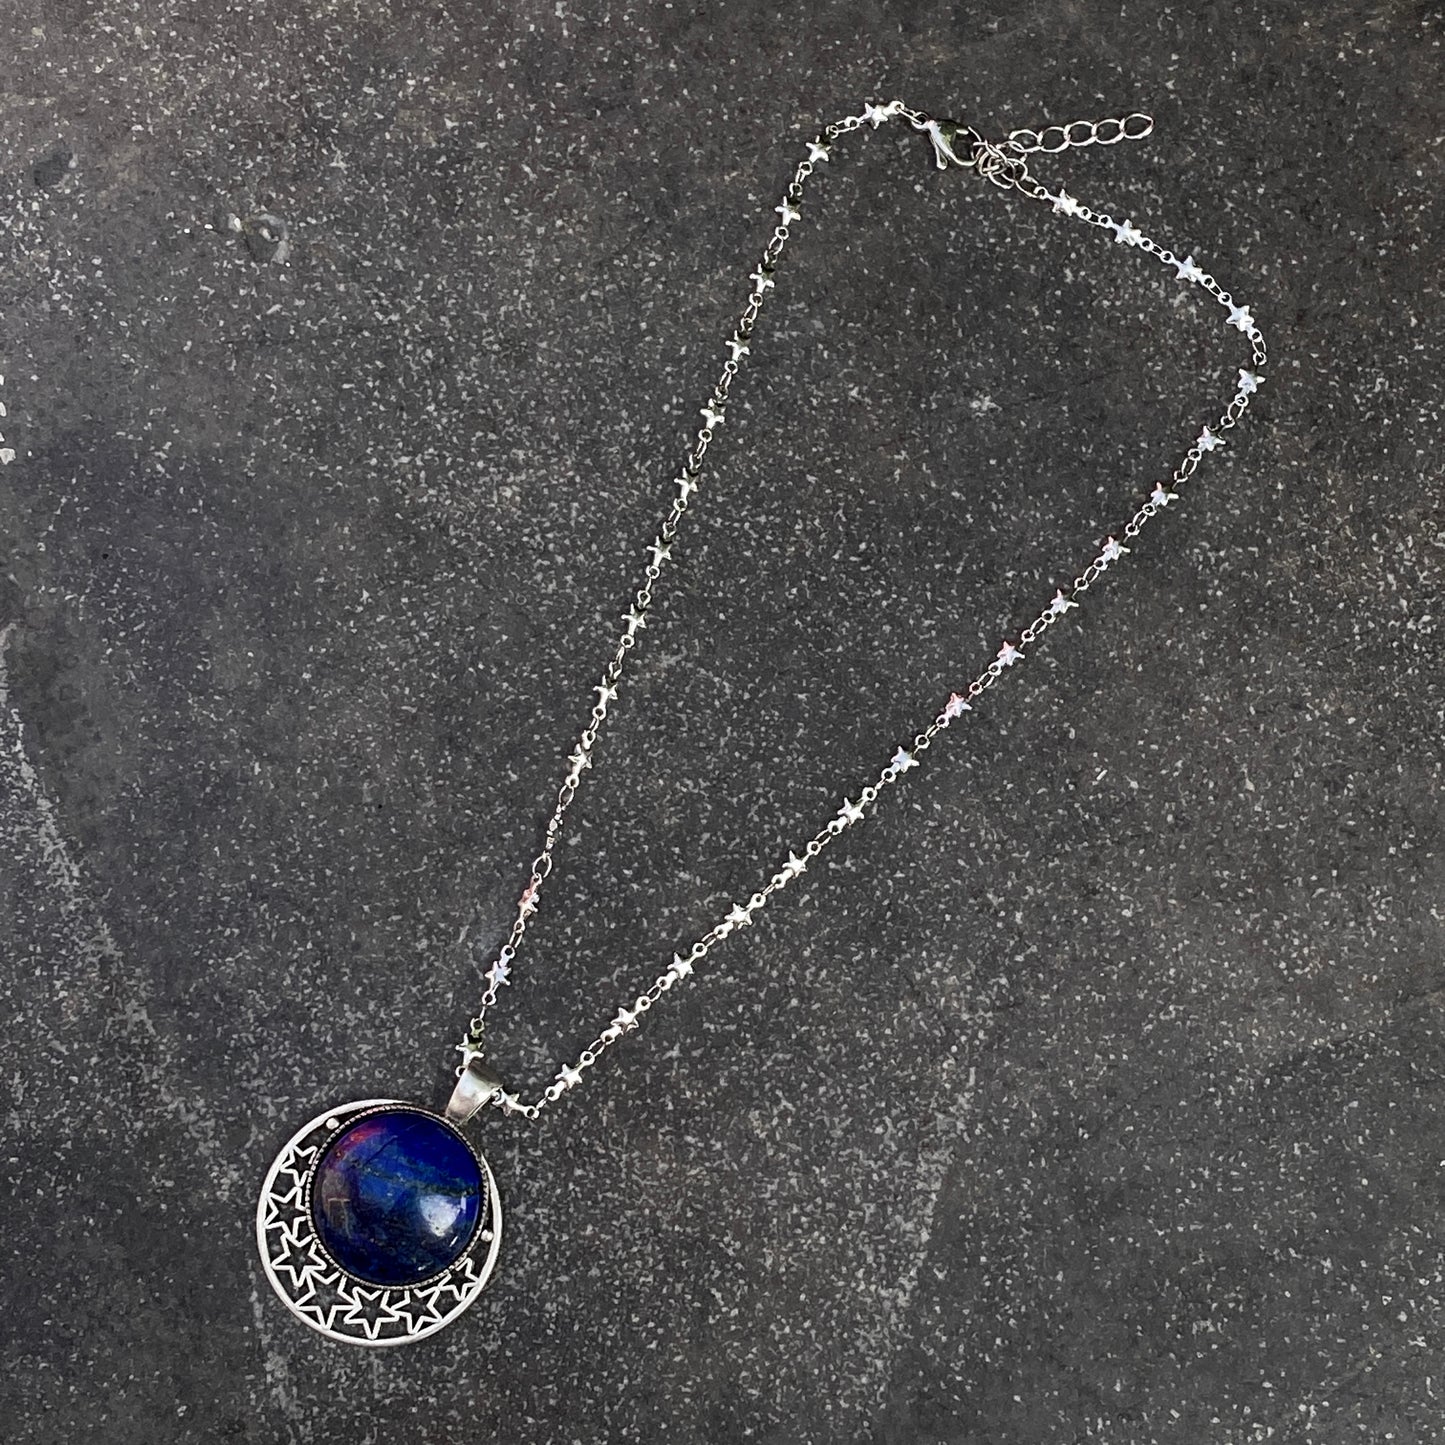 Lapis Lazuli gemsotne pendant Necklace on steel chain.